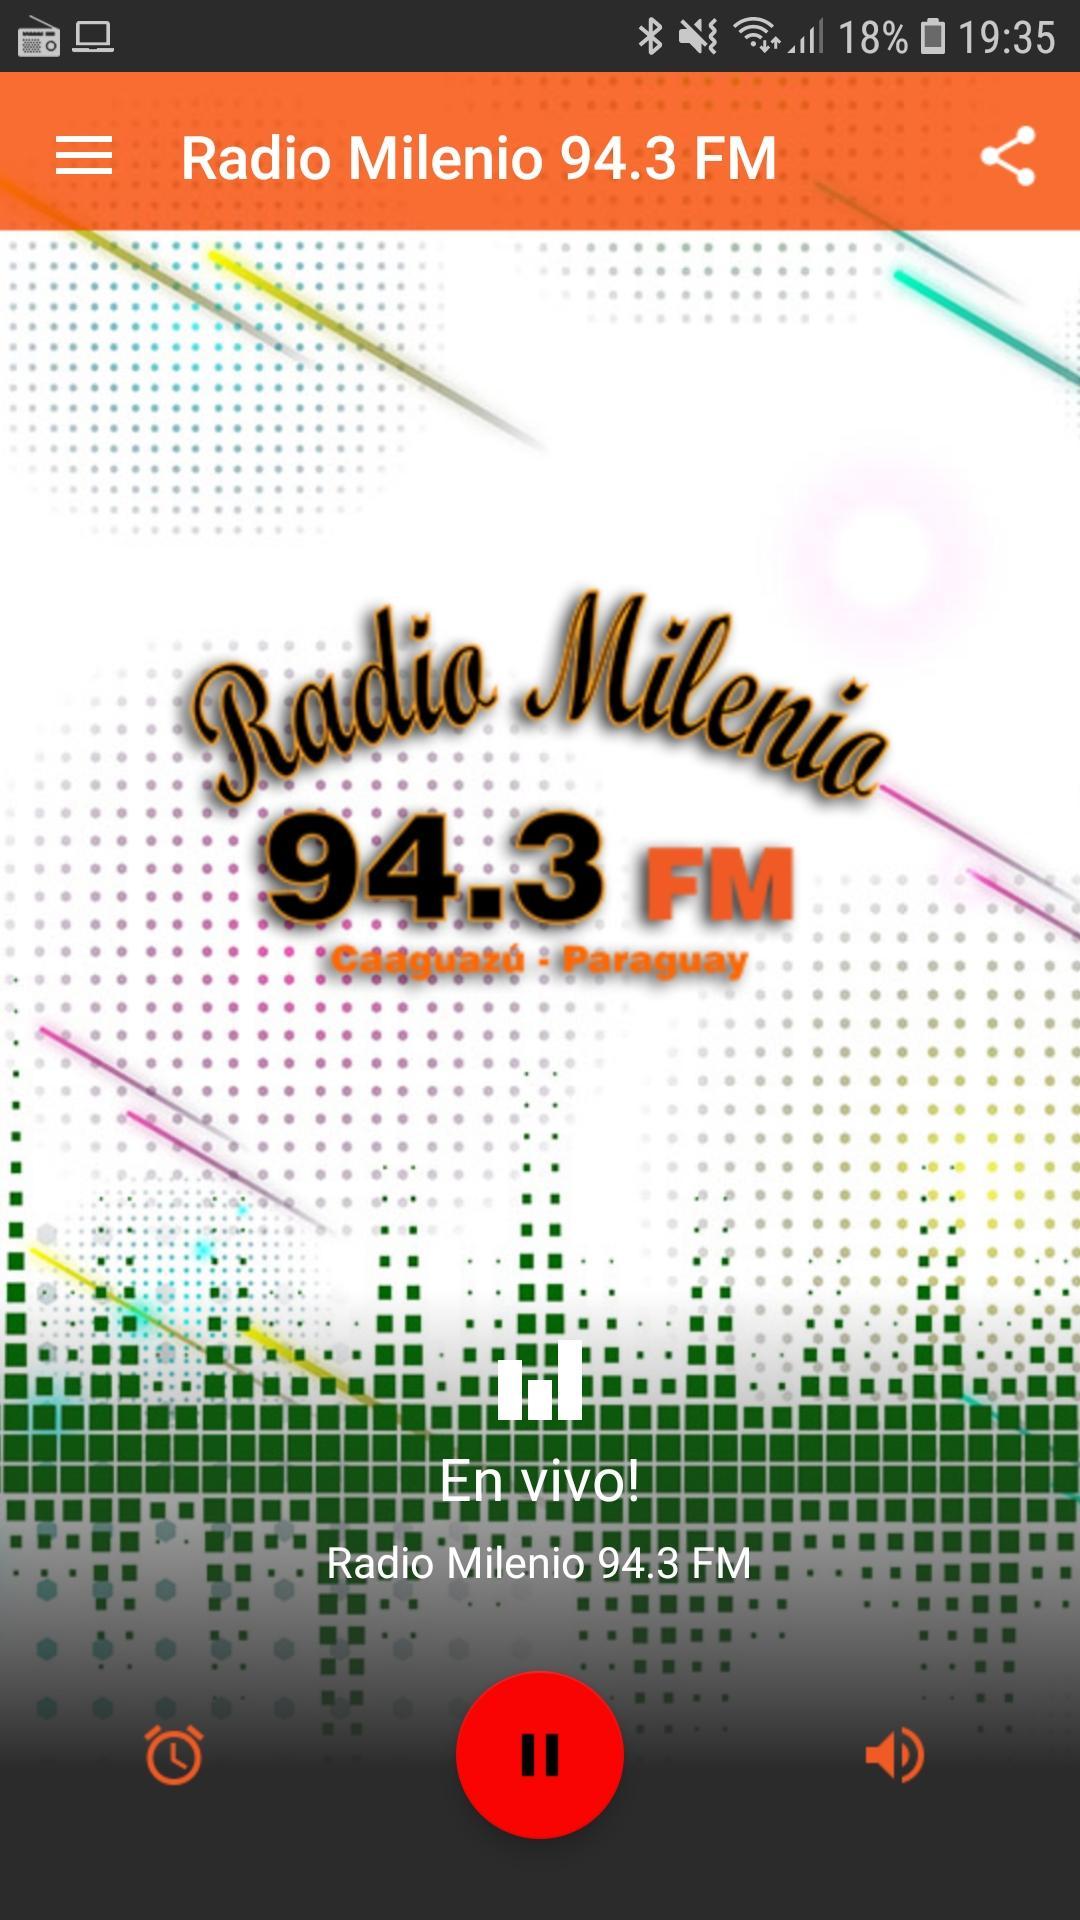 Radio Milenio 94.3 FM for Android - APK Download